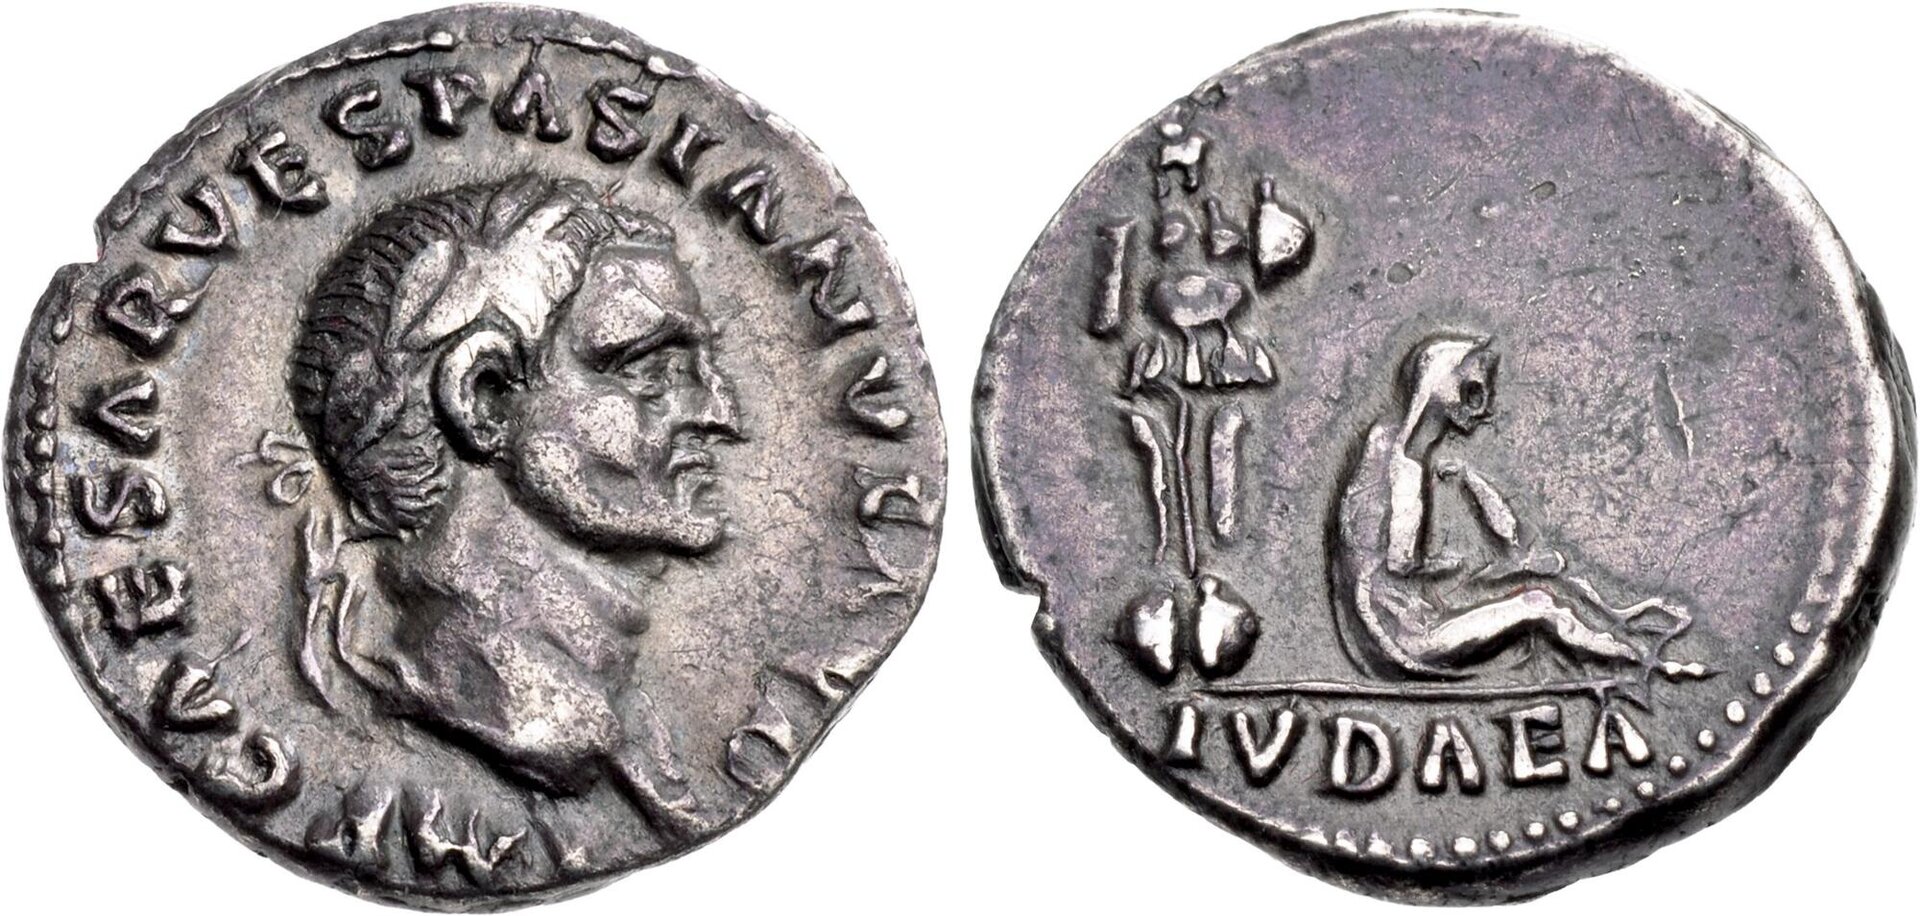 Vepasian denarius Judaea - from CNG TRITON XXV - Jan 2022 - $ 4700+.jpeg